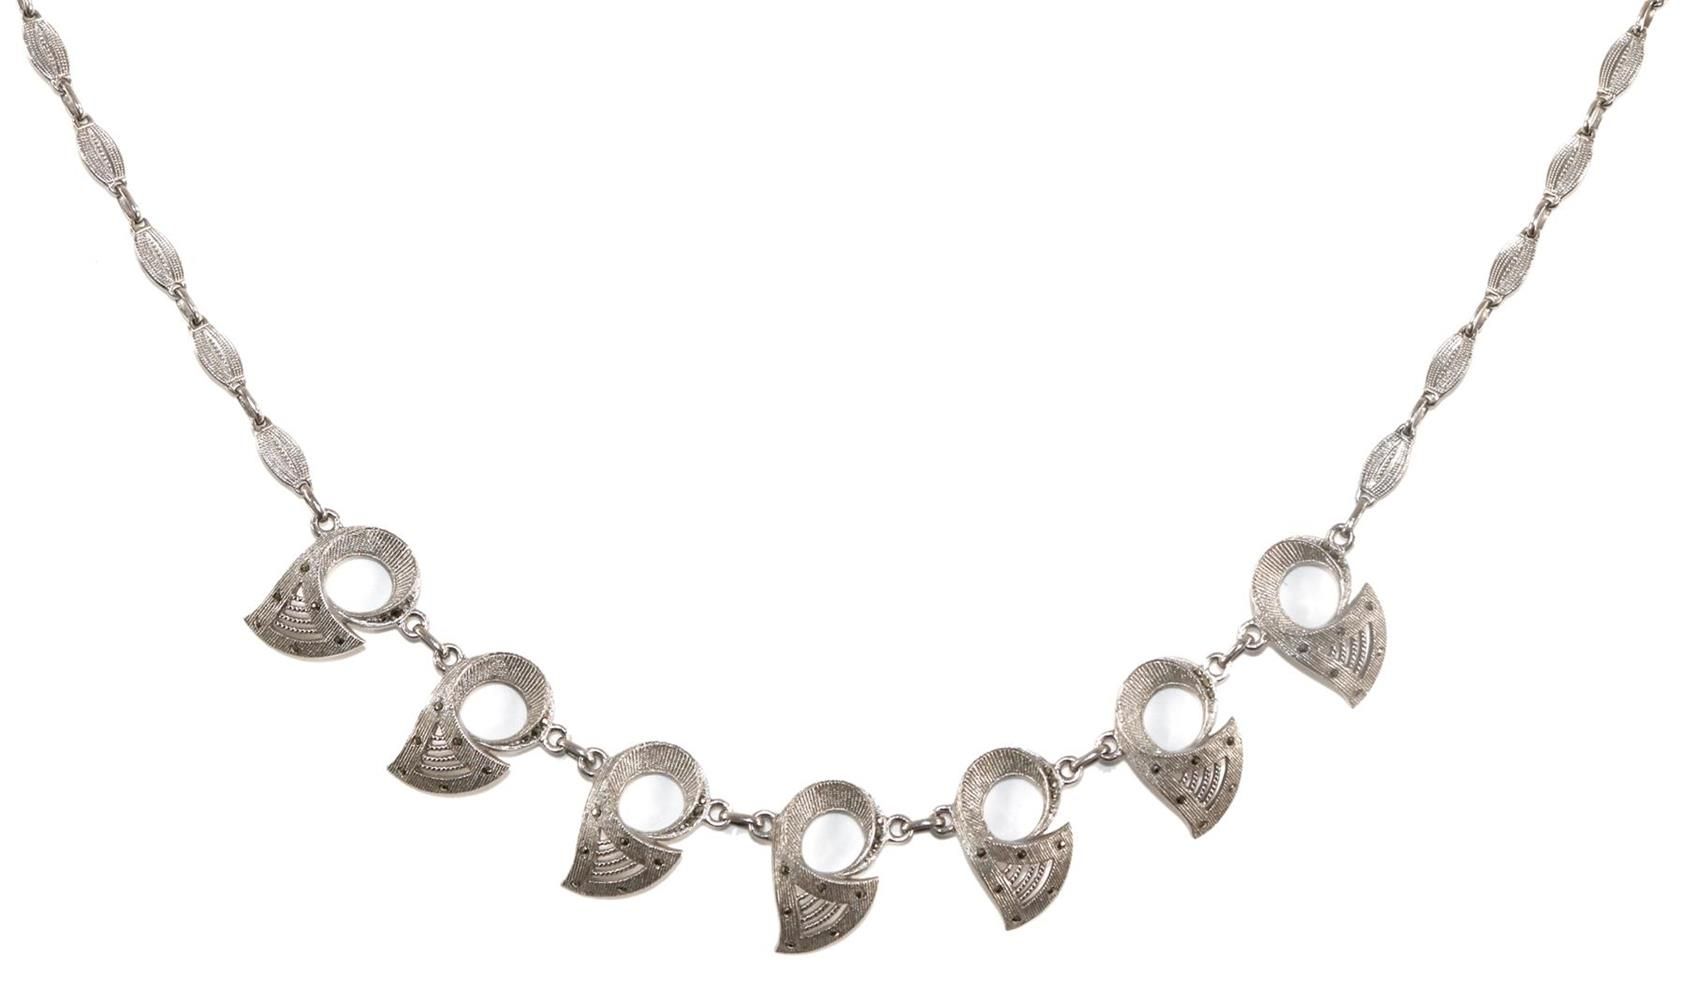 Collier um 1935/40 Theodor Fahrner银项链，带有蜗牛形状的元素和玛瑙装饰。原始销售标签。在这种几乎完美的条件下，非常罕见。TF &hellip;